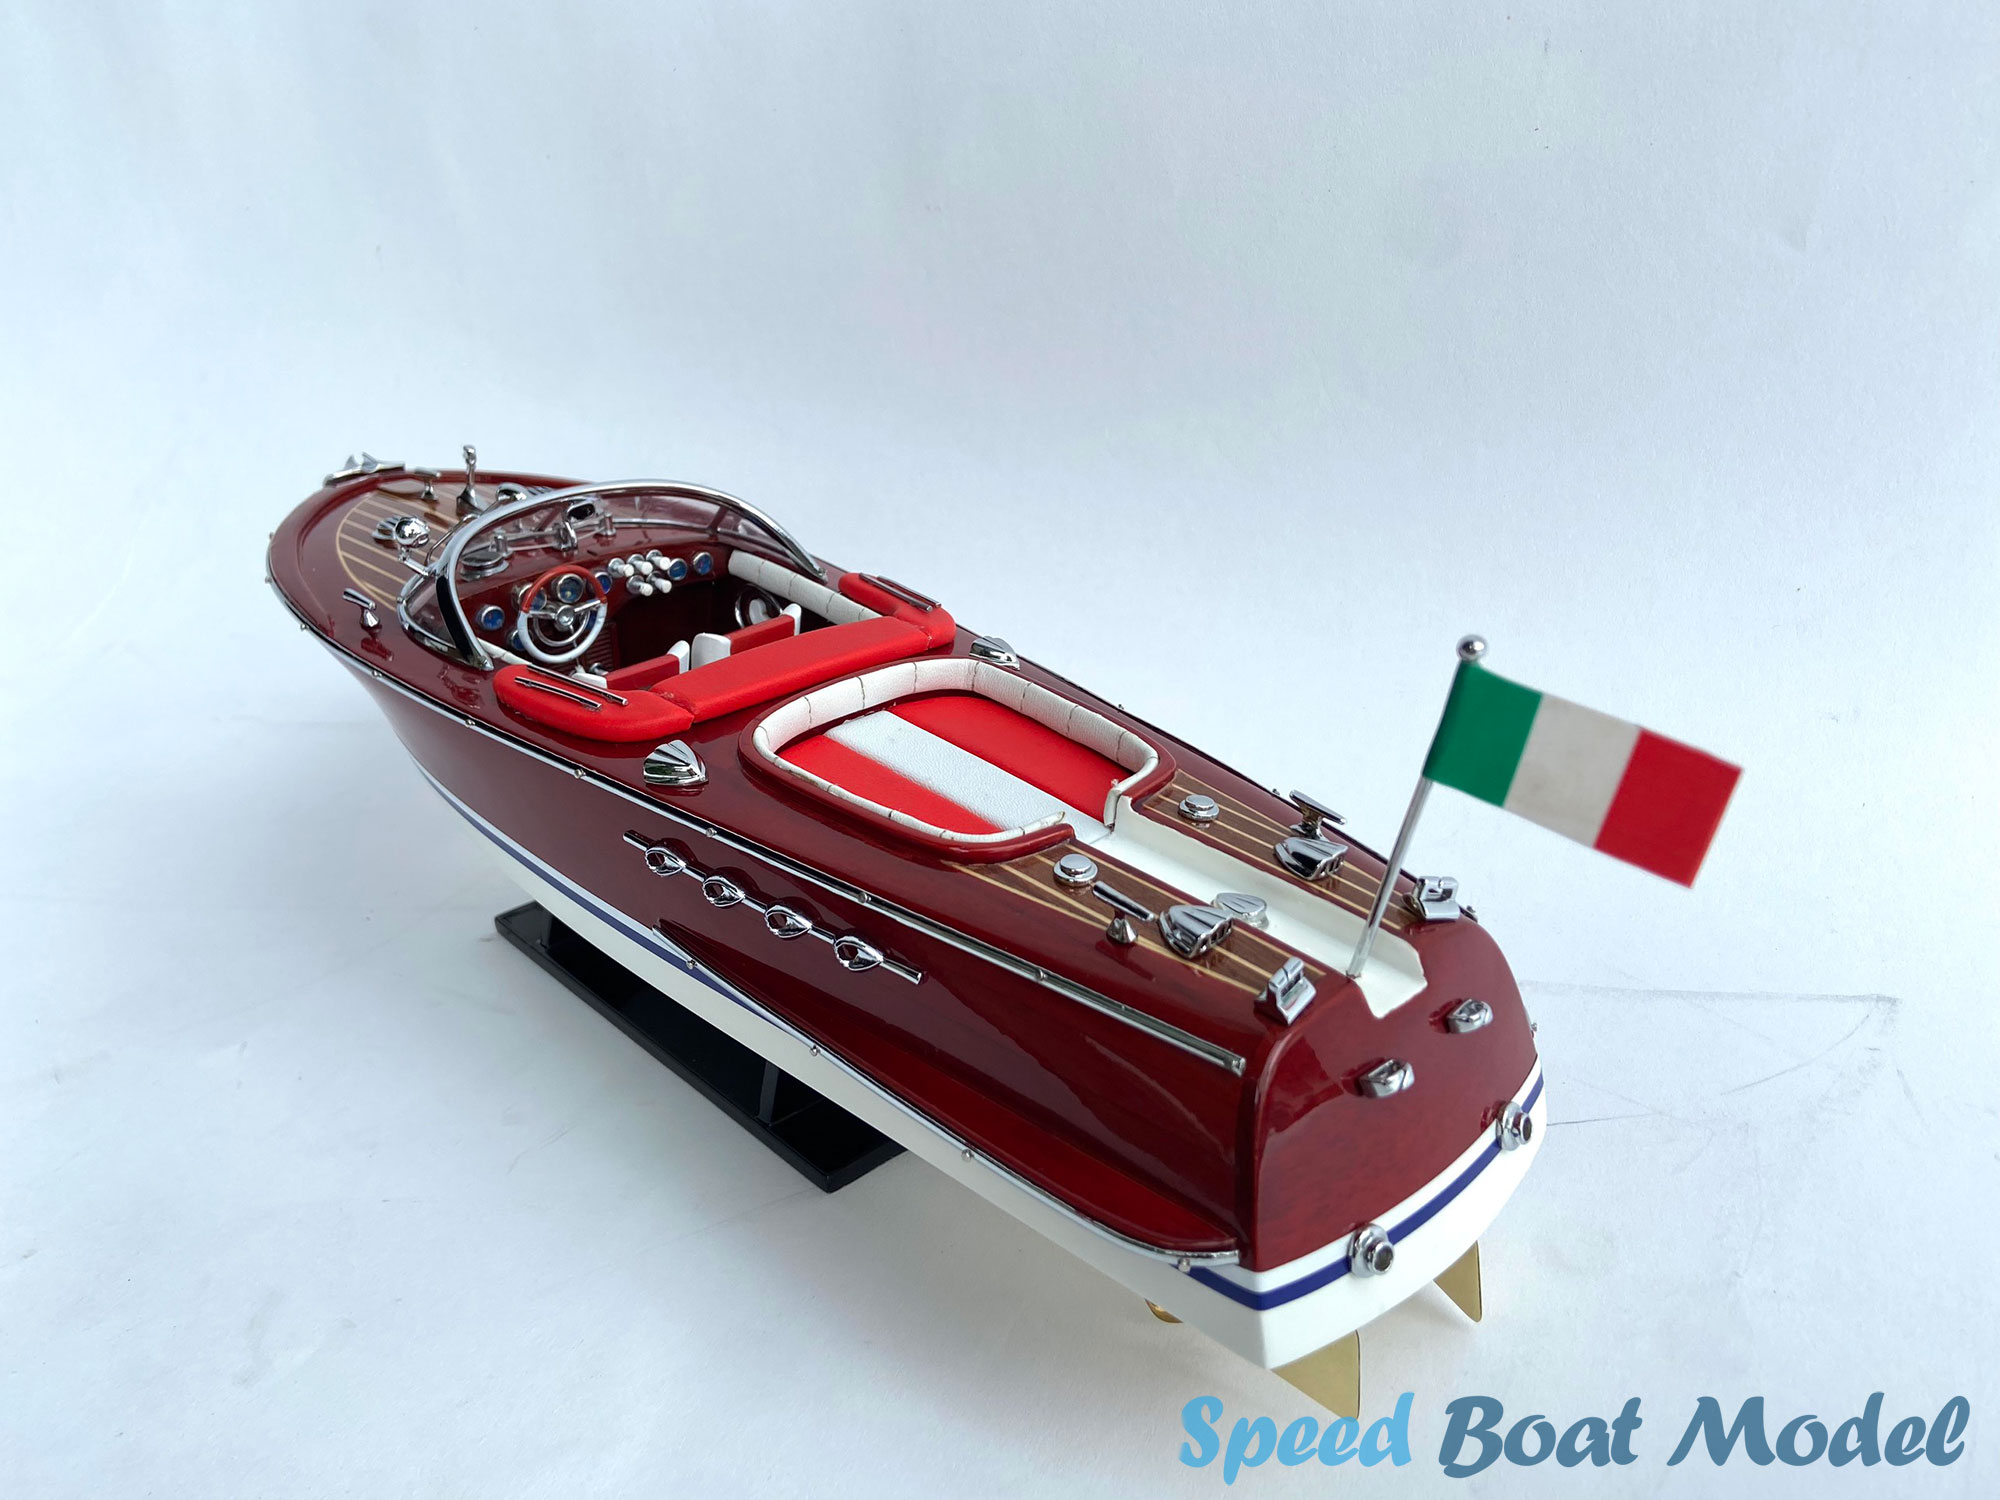 Red Super Riva Aquarama Classic Boat Model 34.2″